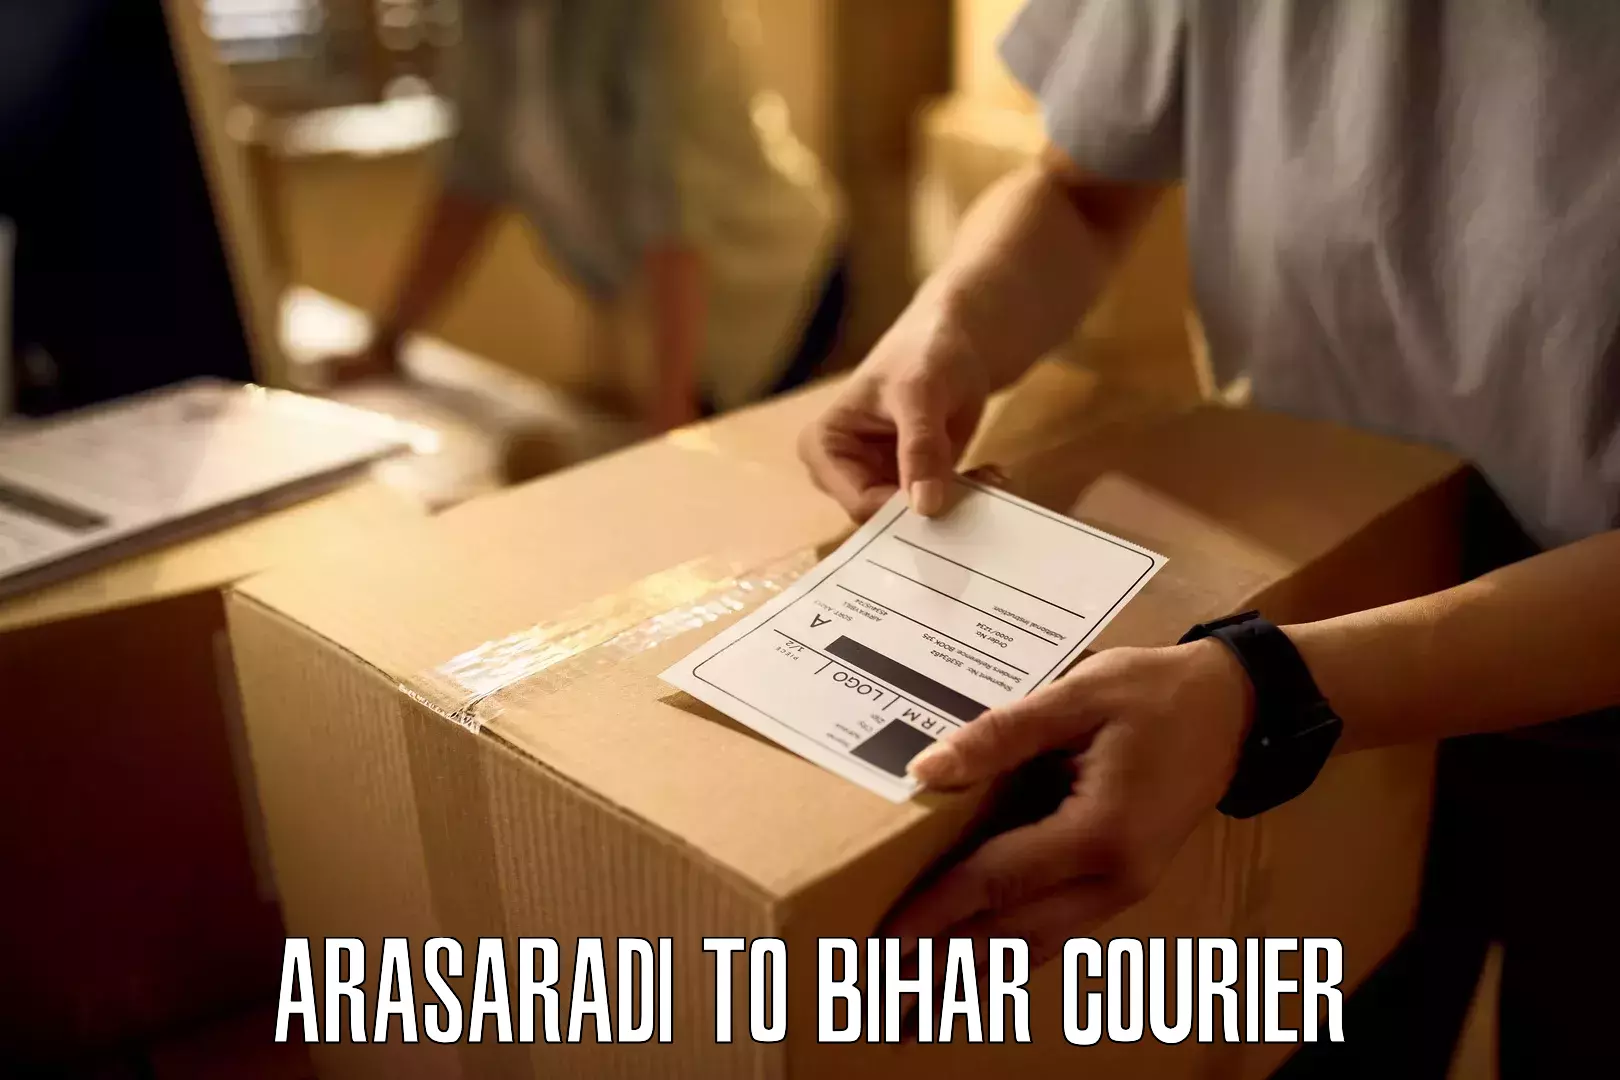 Courier tracking online Arasaradi to Bihar